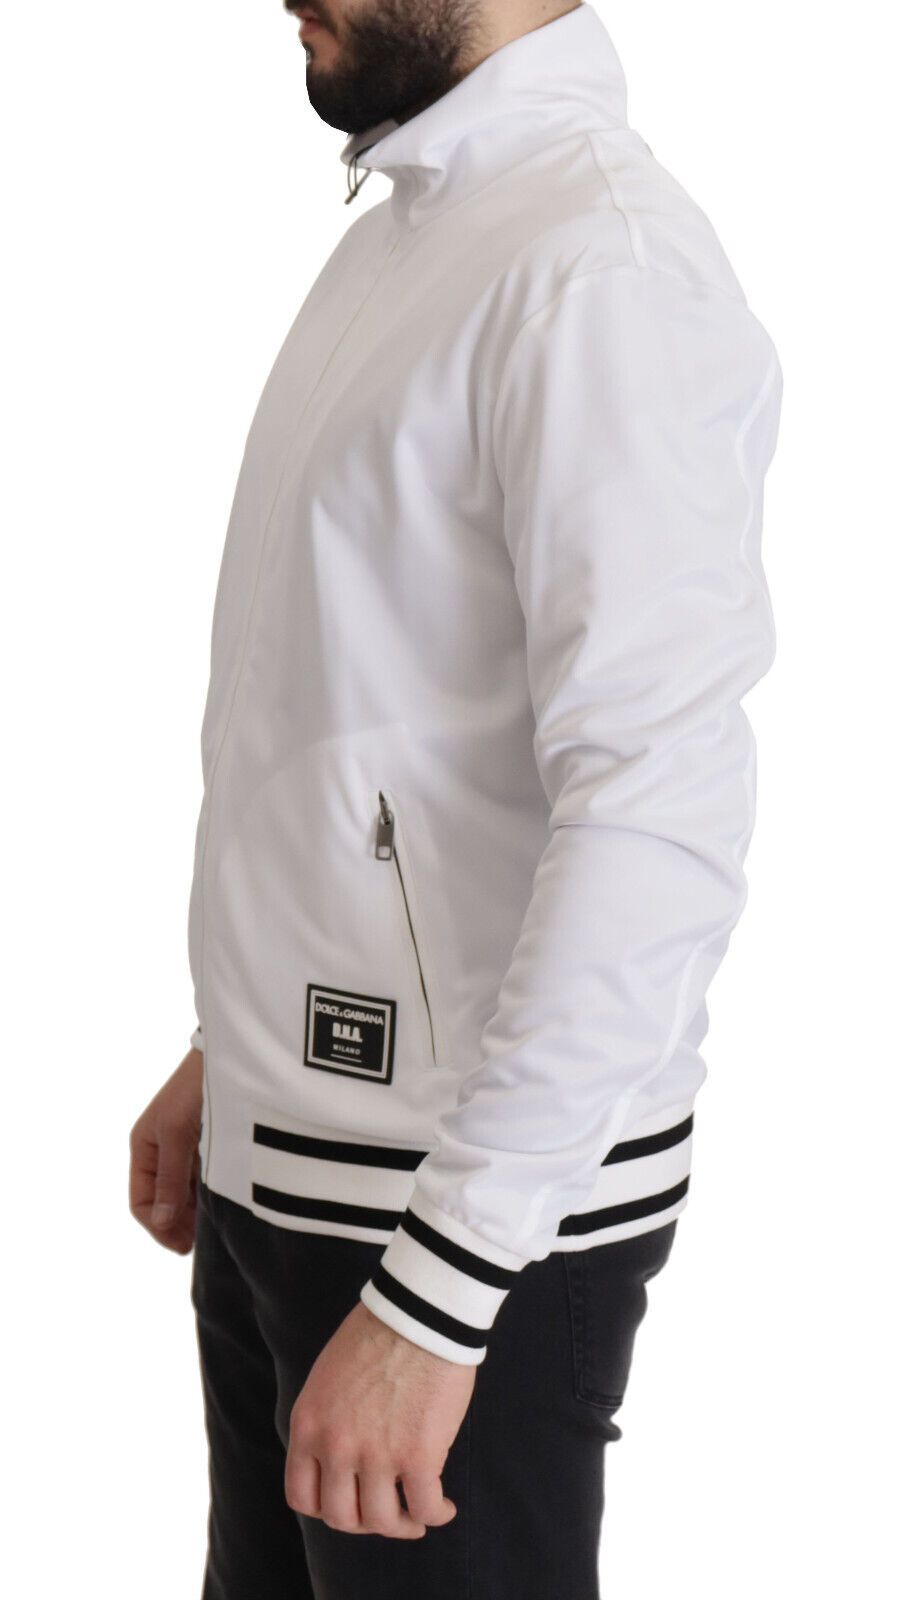 Dolce & Gabbana Sleek White Zip Sweater for Men